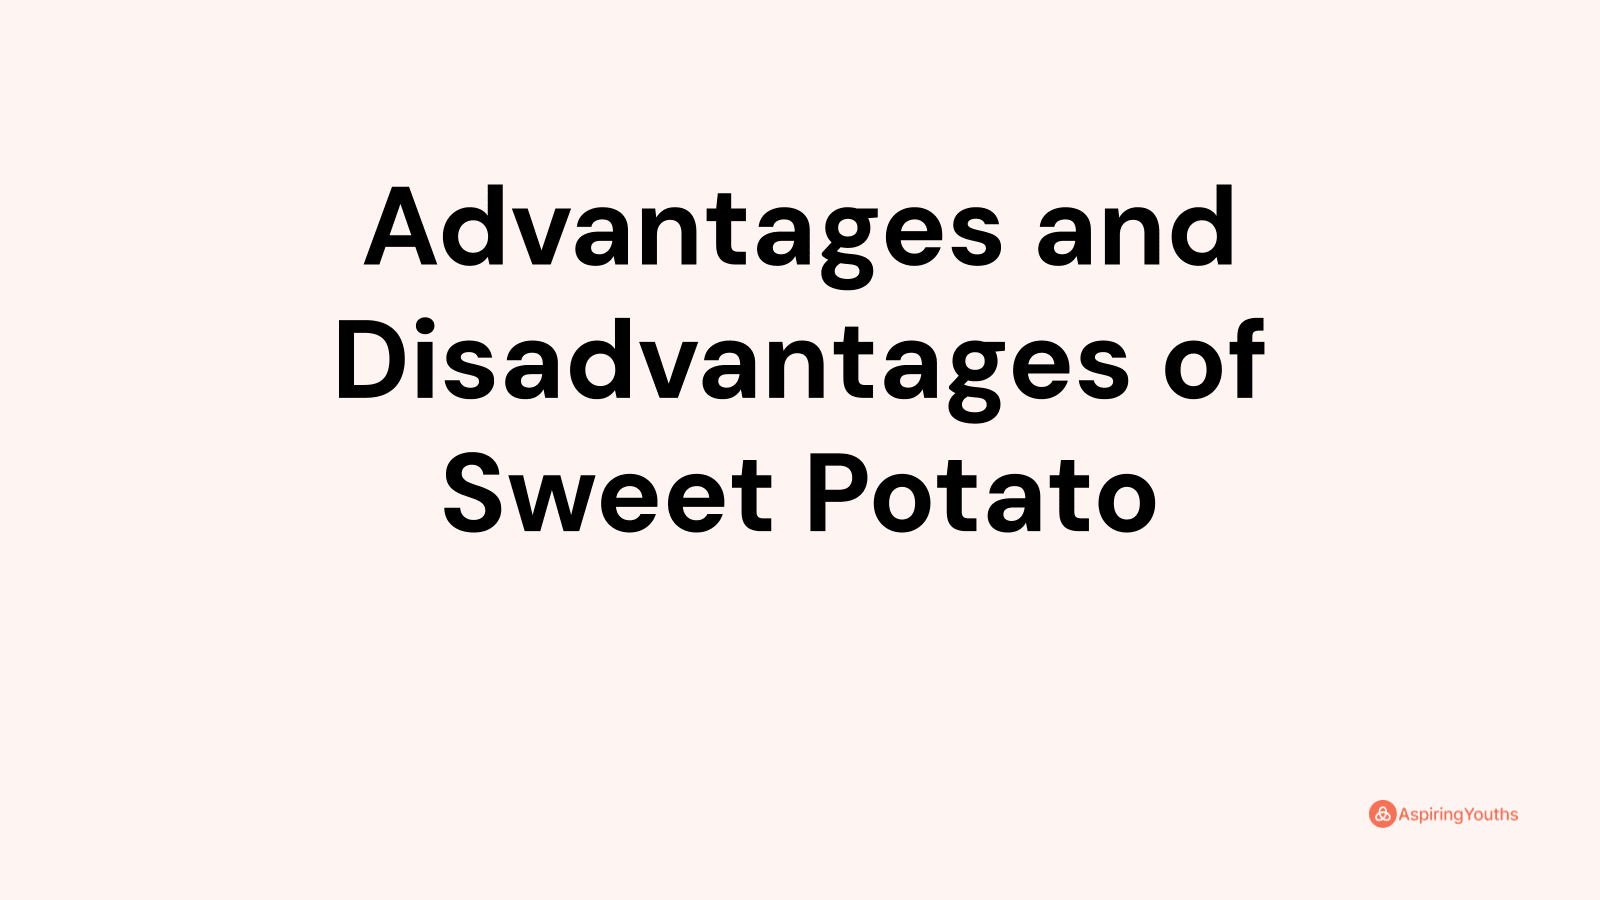 Advantages and disadvantages of Sweet Potato